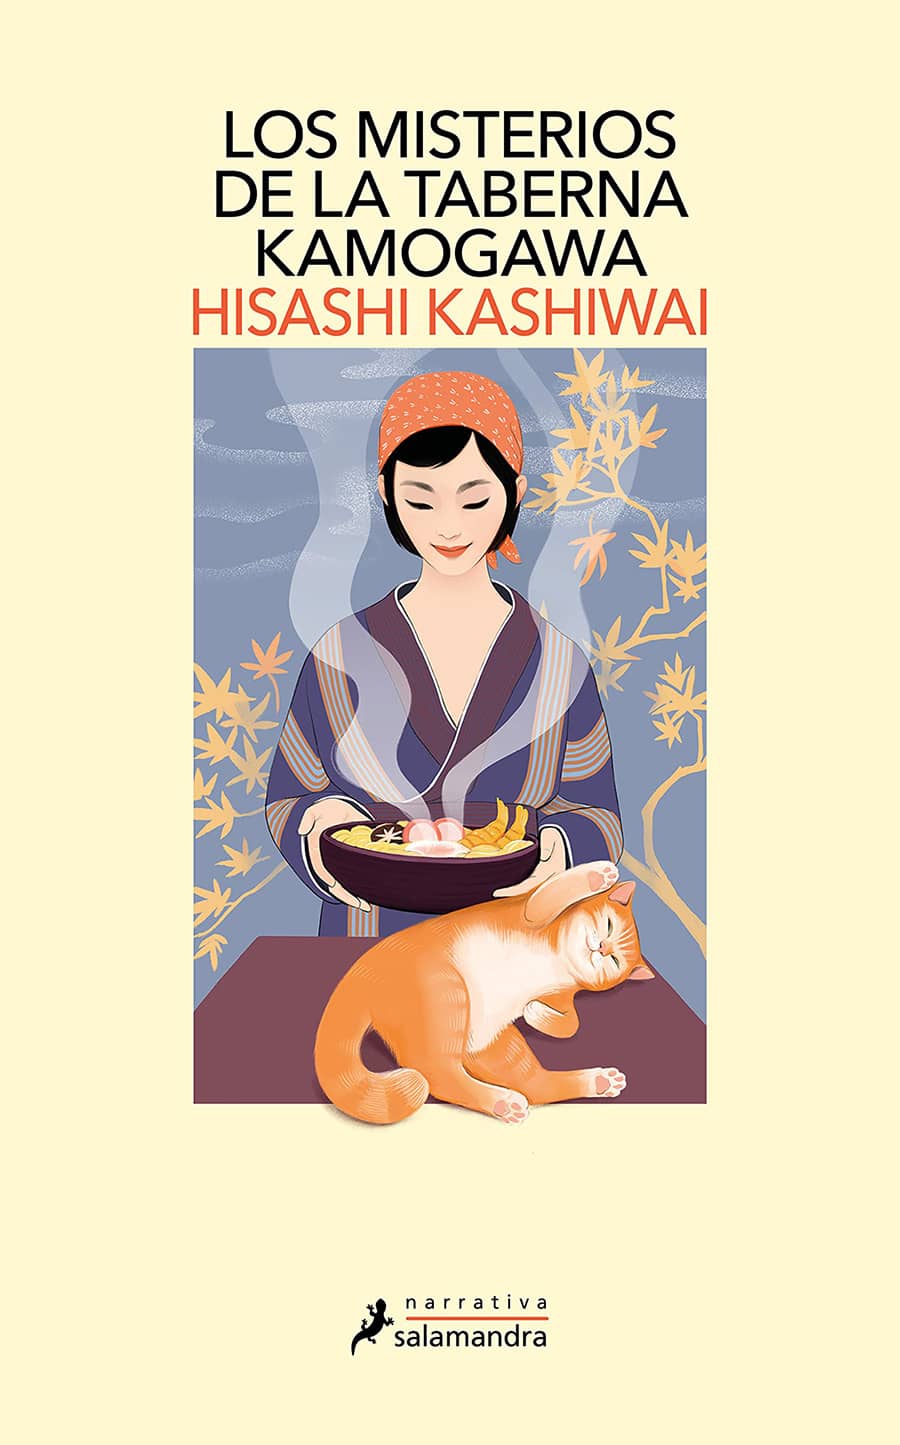 mysteries of Kamogawa tabern, hisashi Kashiwai, kioto, kyoto, foodie book, cosy mystery, novela, novel, book cover book caver art, illustration